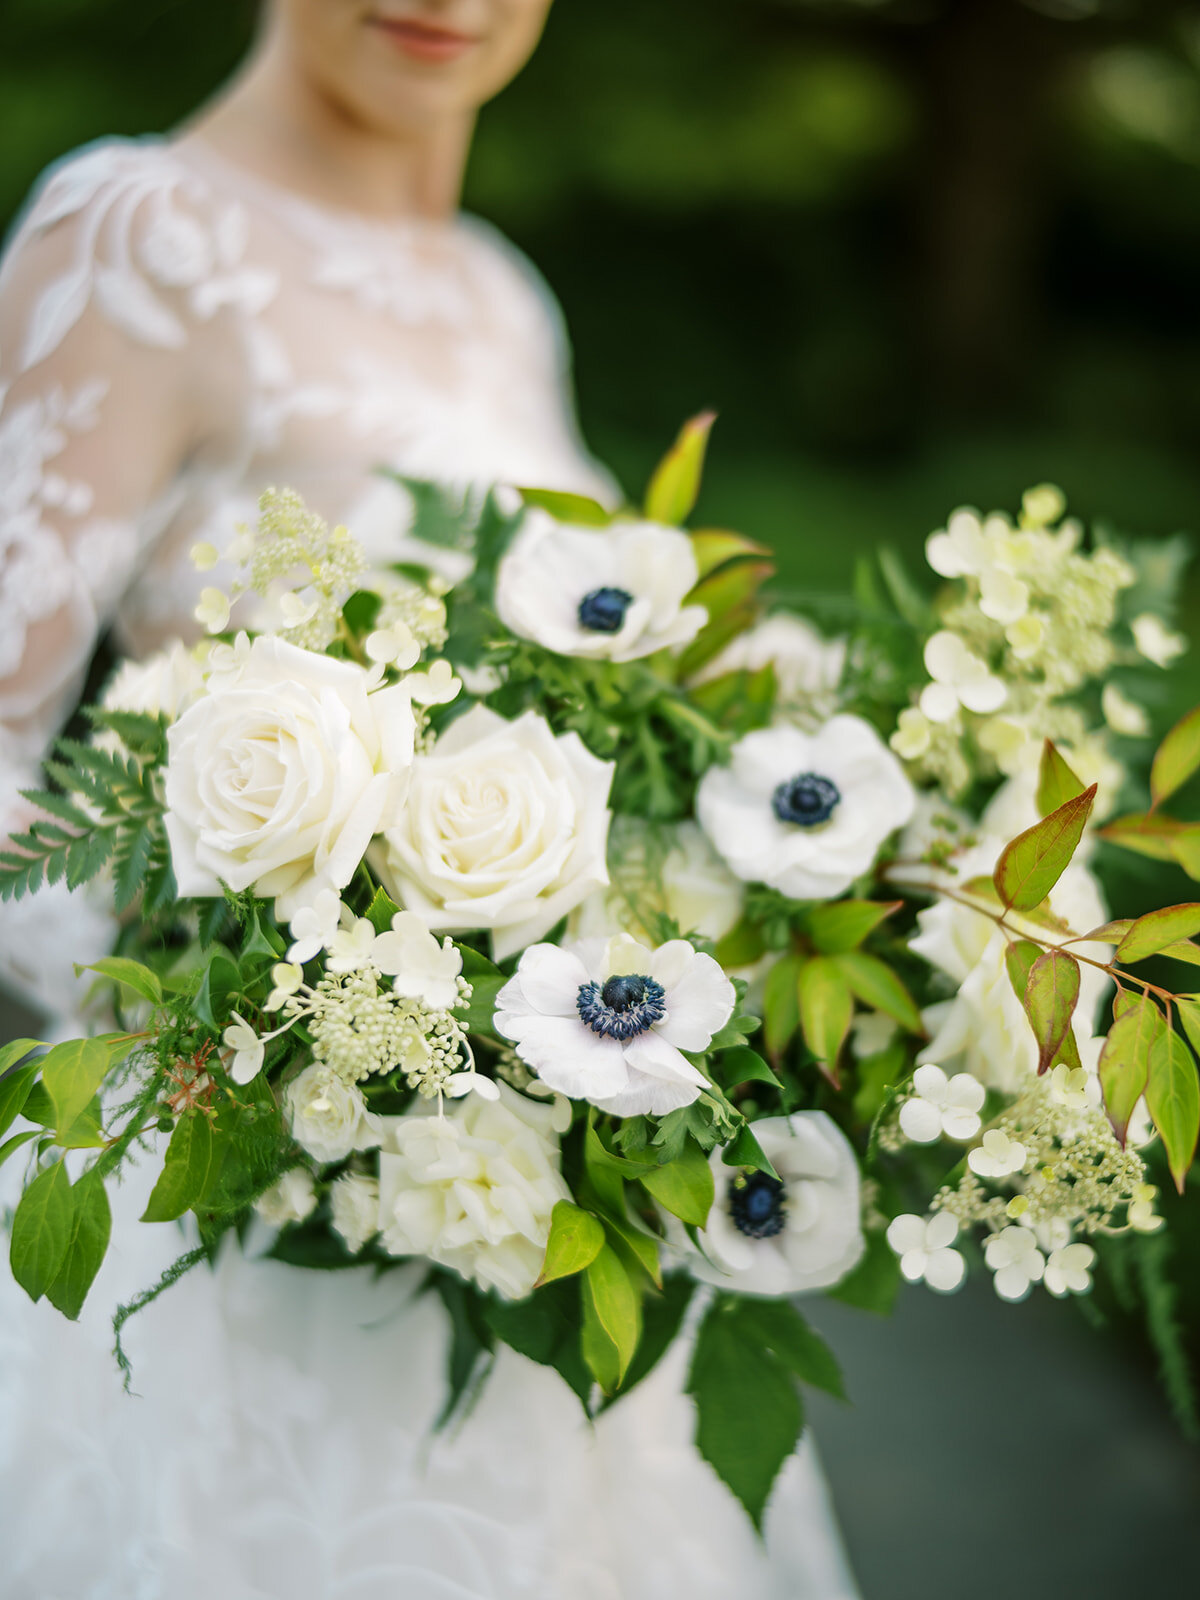 Woodmark-hotel-kirkland-wedding-bouquet-with-anemones-flora-nova-design-seattle-wedding-florist-seattle-wedding-planner-pacific-engagements-wedding-planning-seattle-wedding-photographer-anna-peters